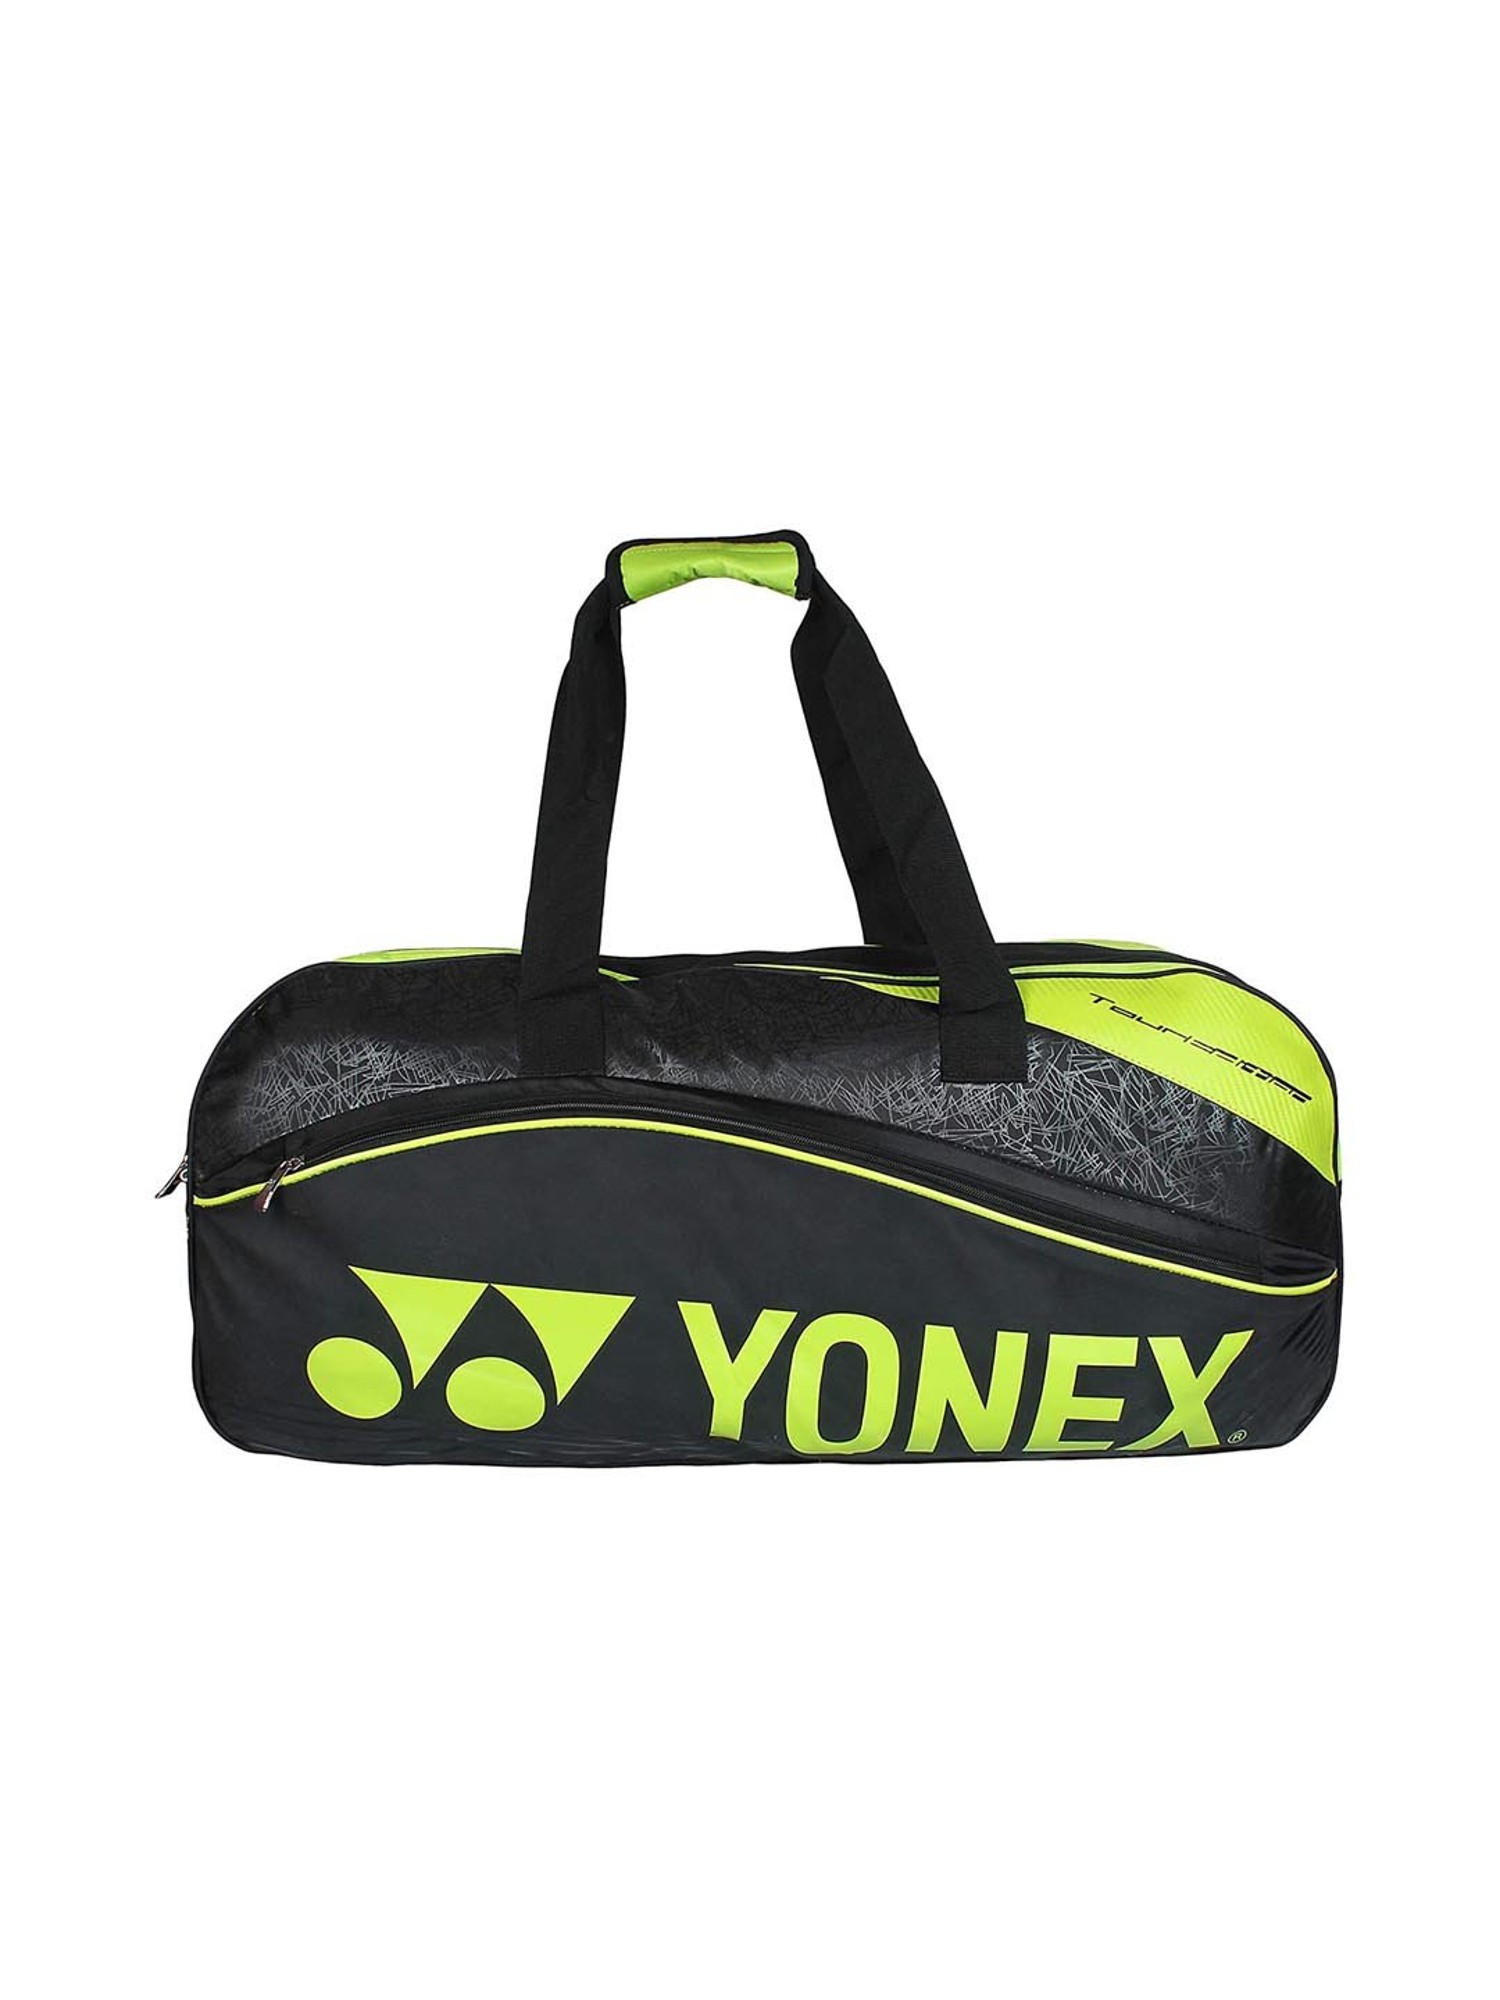 Tour Edition Original YONEX Large Badminton Bag For Women Men Waterproof  Max For 6 Rackets Badminton Bag With Shoes Compartment - AliExpress